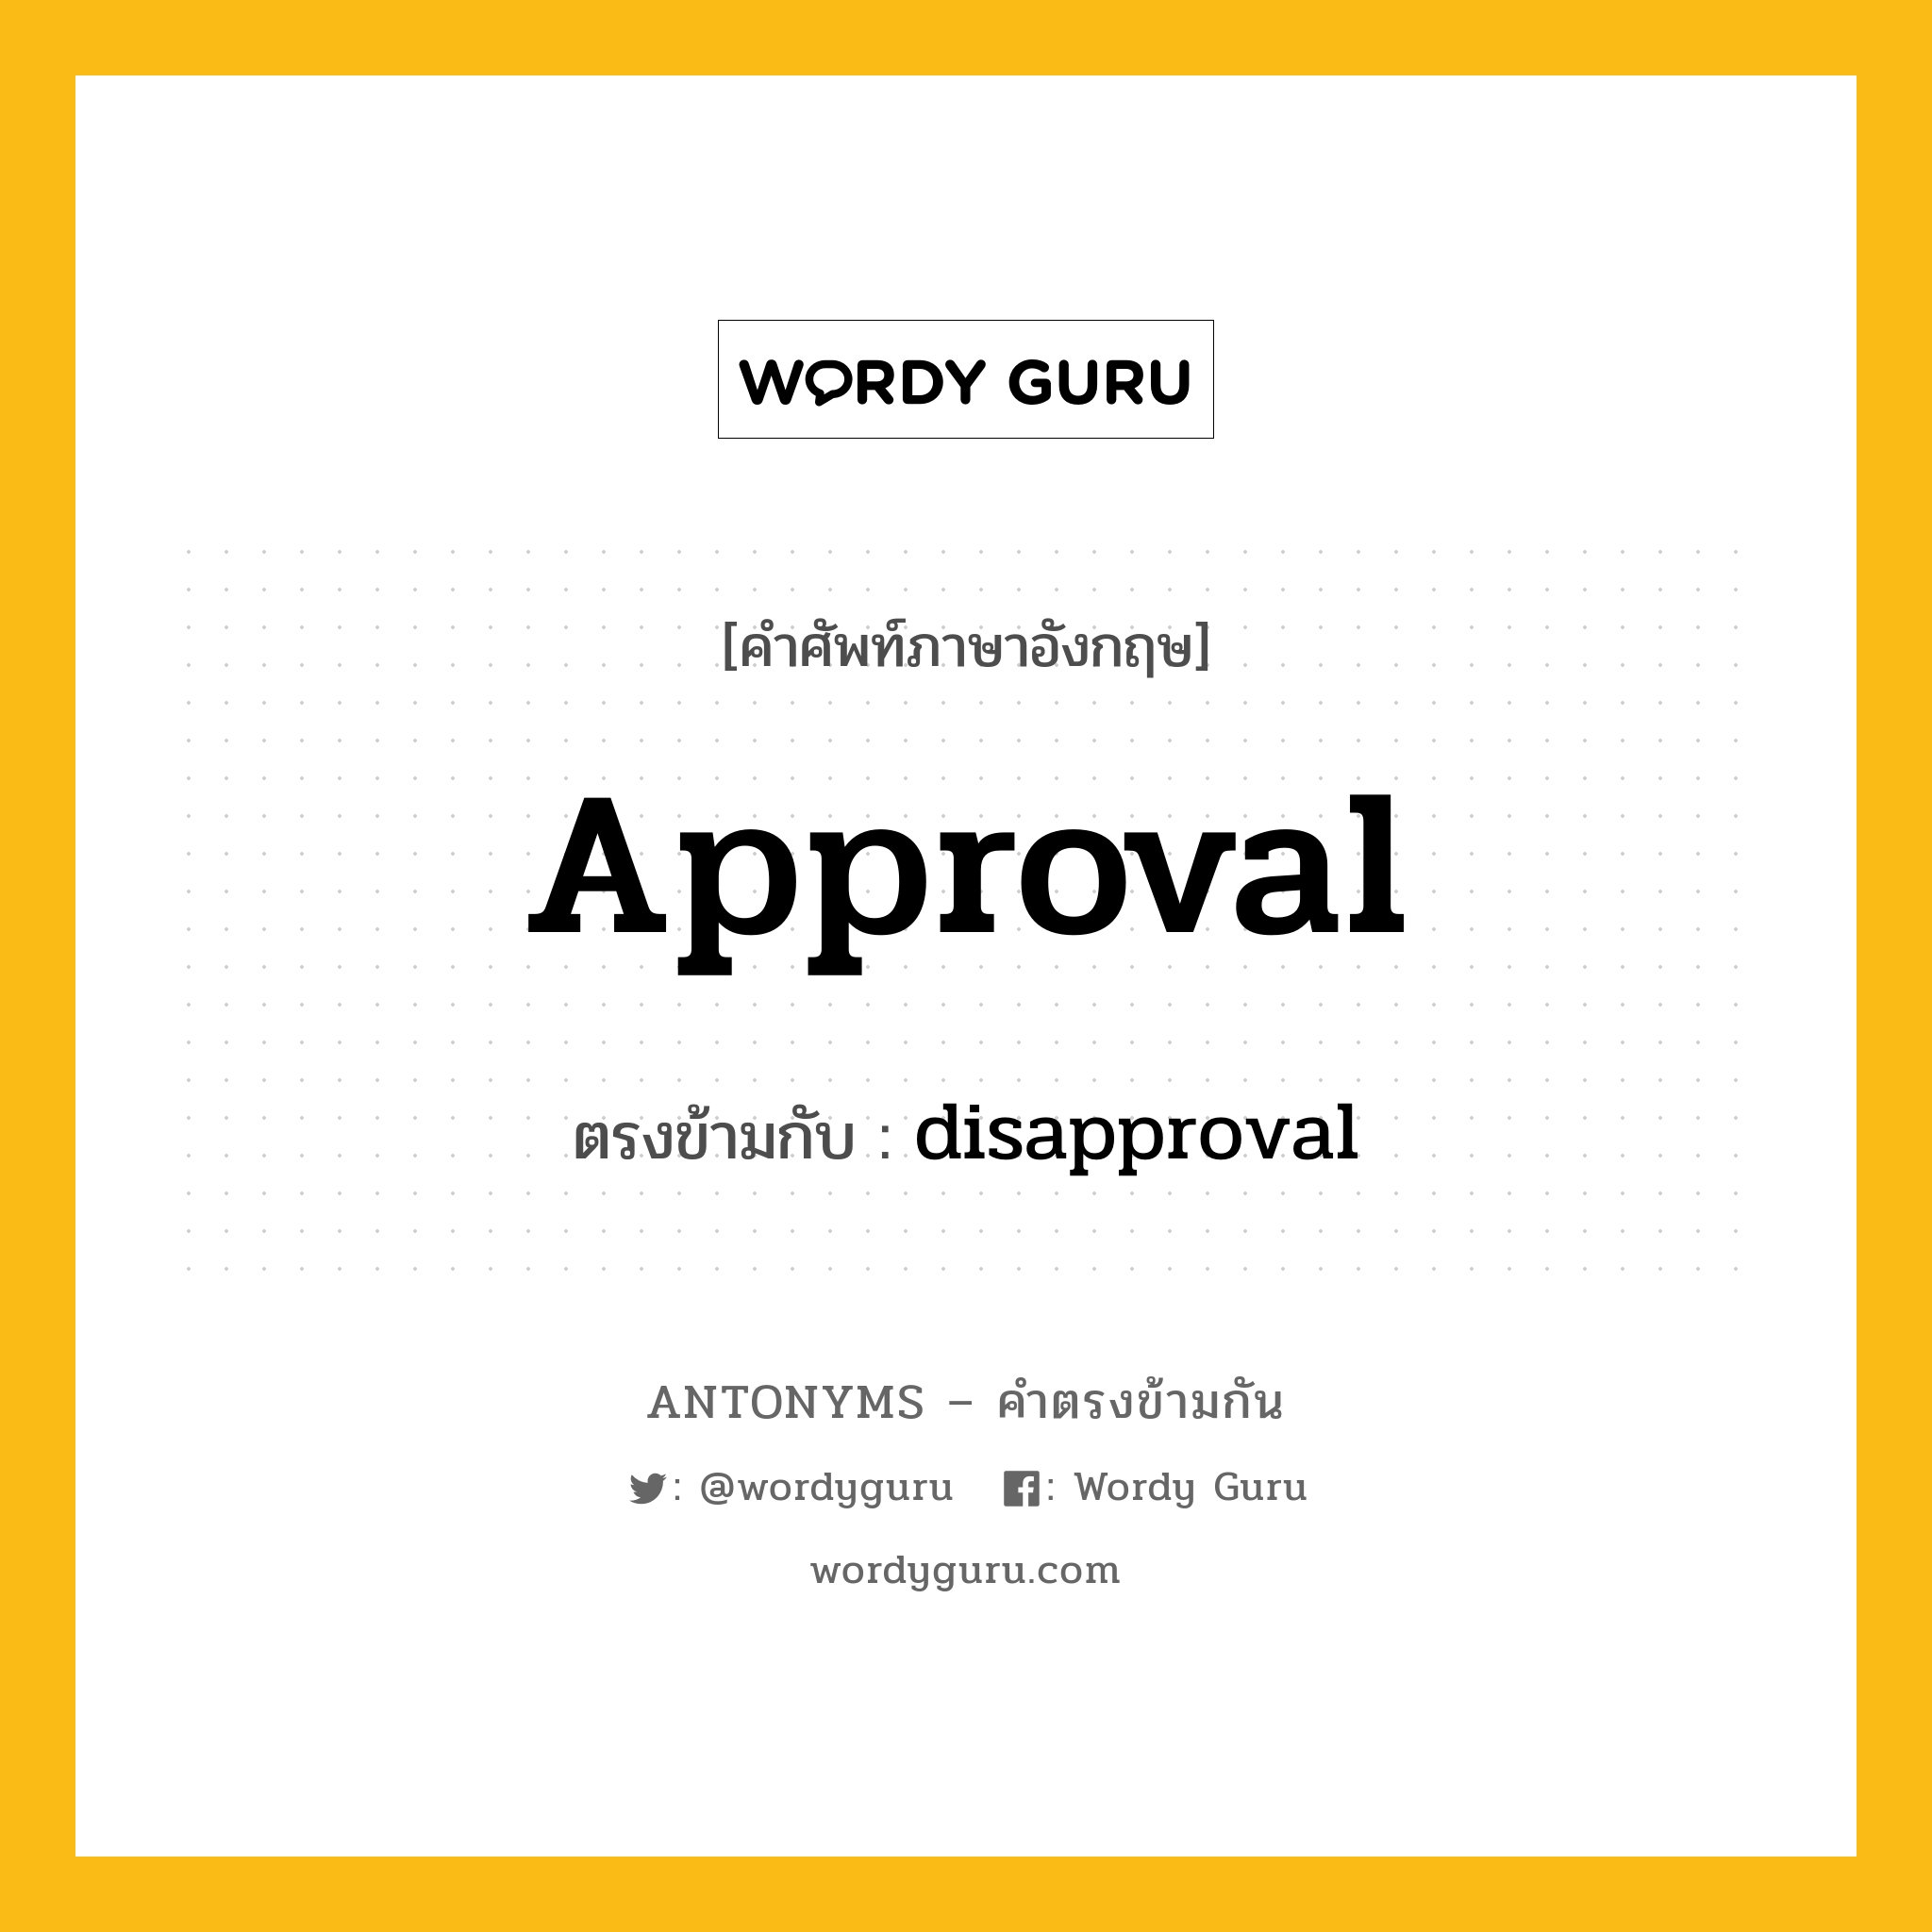 approval เป็นคำตรงข้ามกับคำไหนบ้าง?, คำศัพท์ภาษาอังกฤษ approval ตรงข้ามกับ disapproval หมวด disapproval